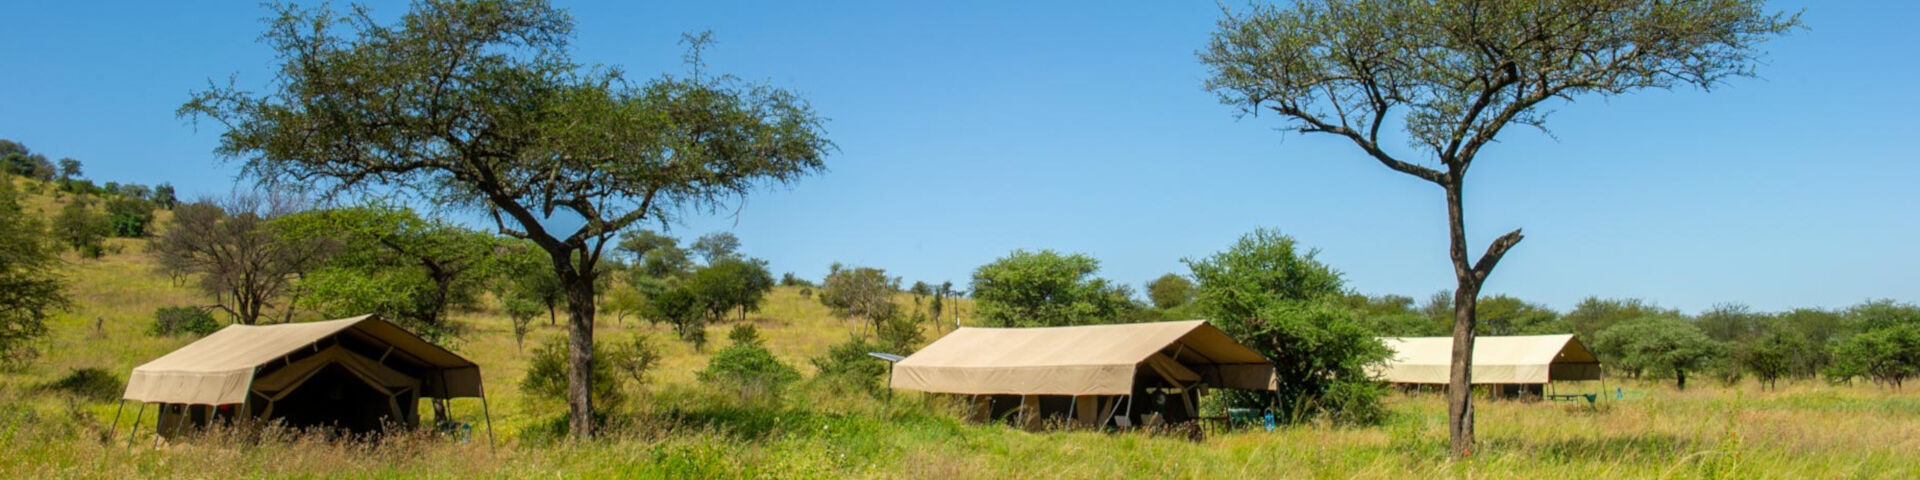 Kati Kati Camp - Central Serengeti - Tanzania